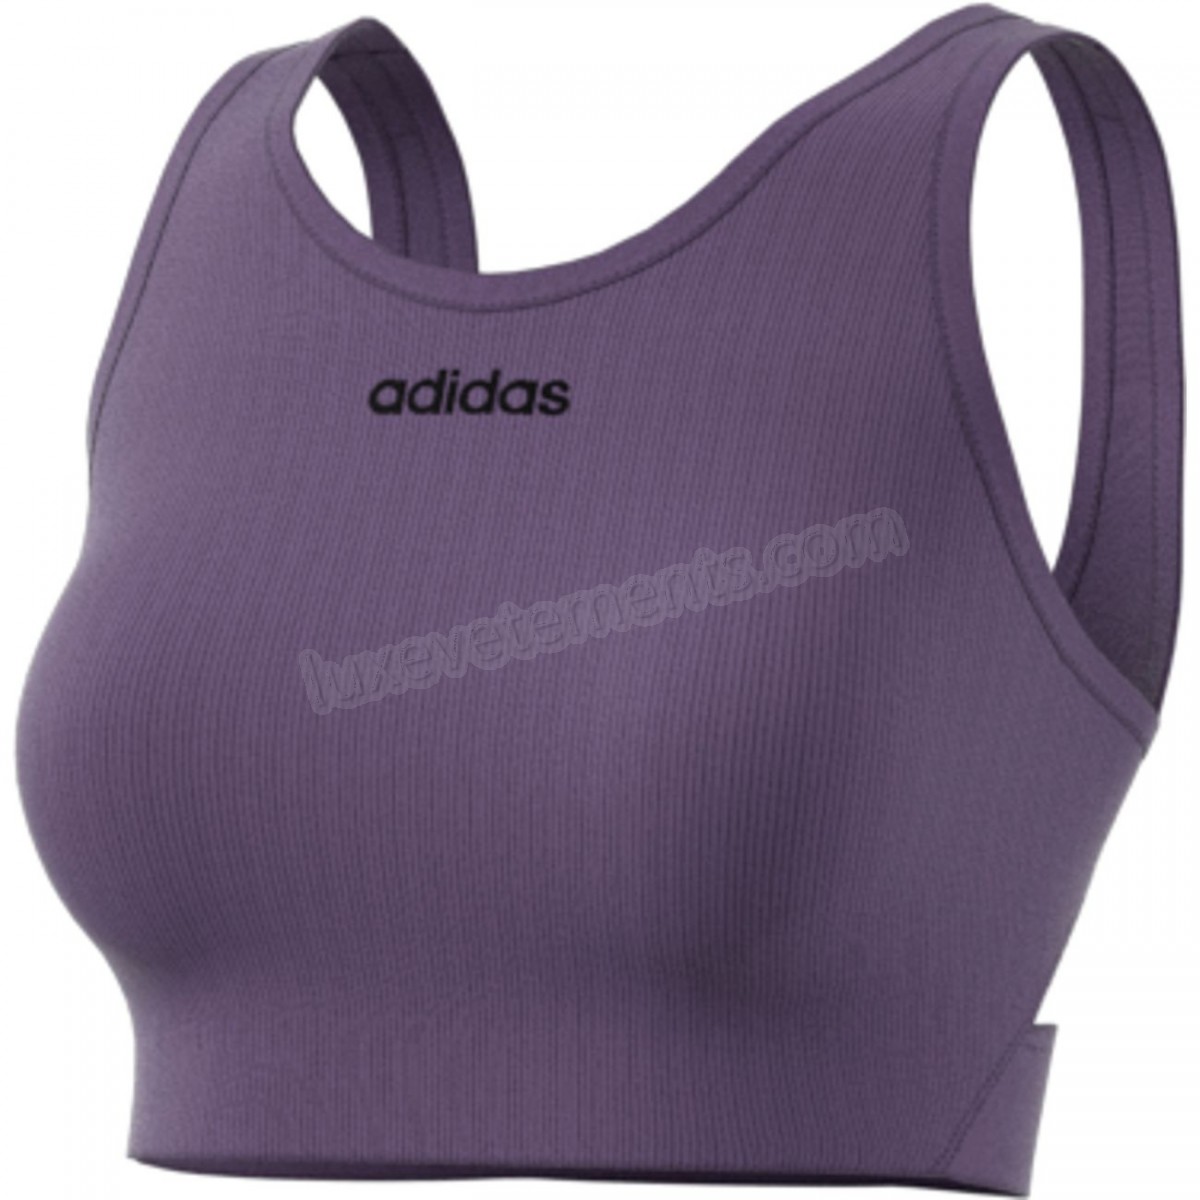 Adidas-Fitness femme ADIDAS Brassière adidas Core Training Vente en ligne - -4